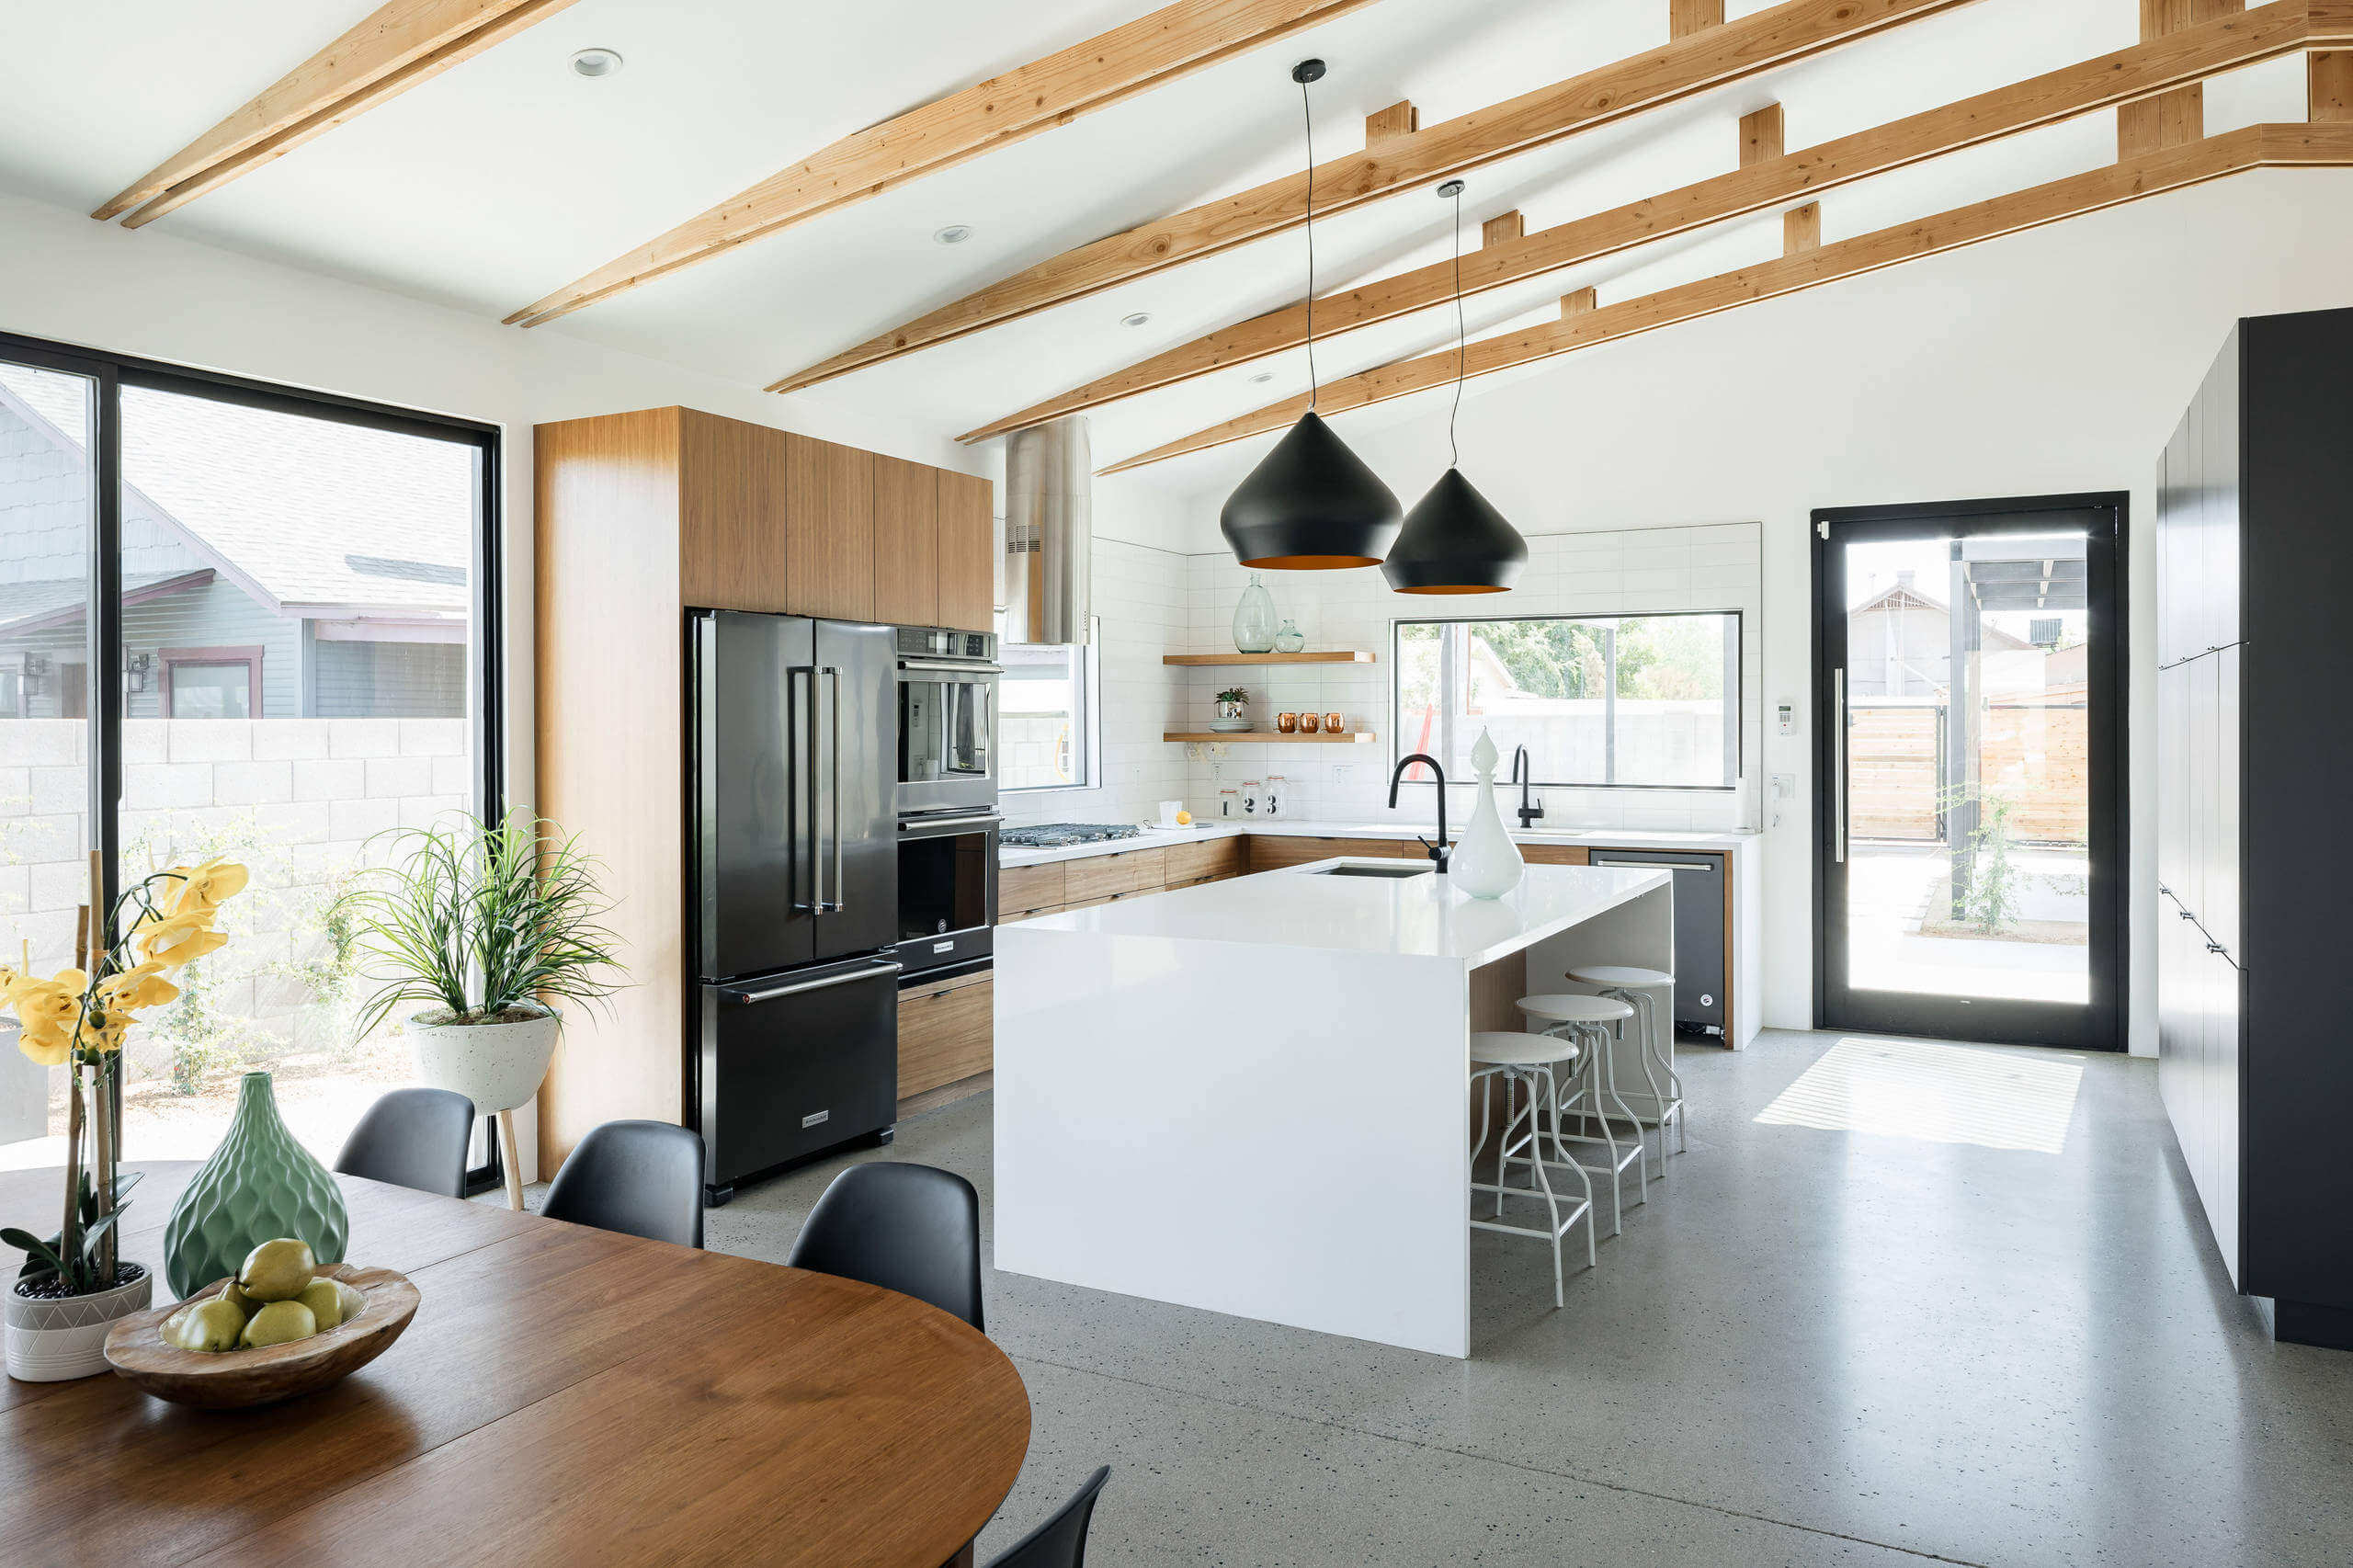 7 kitchen countertop ideas